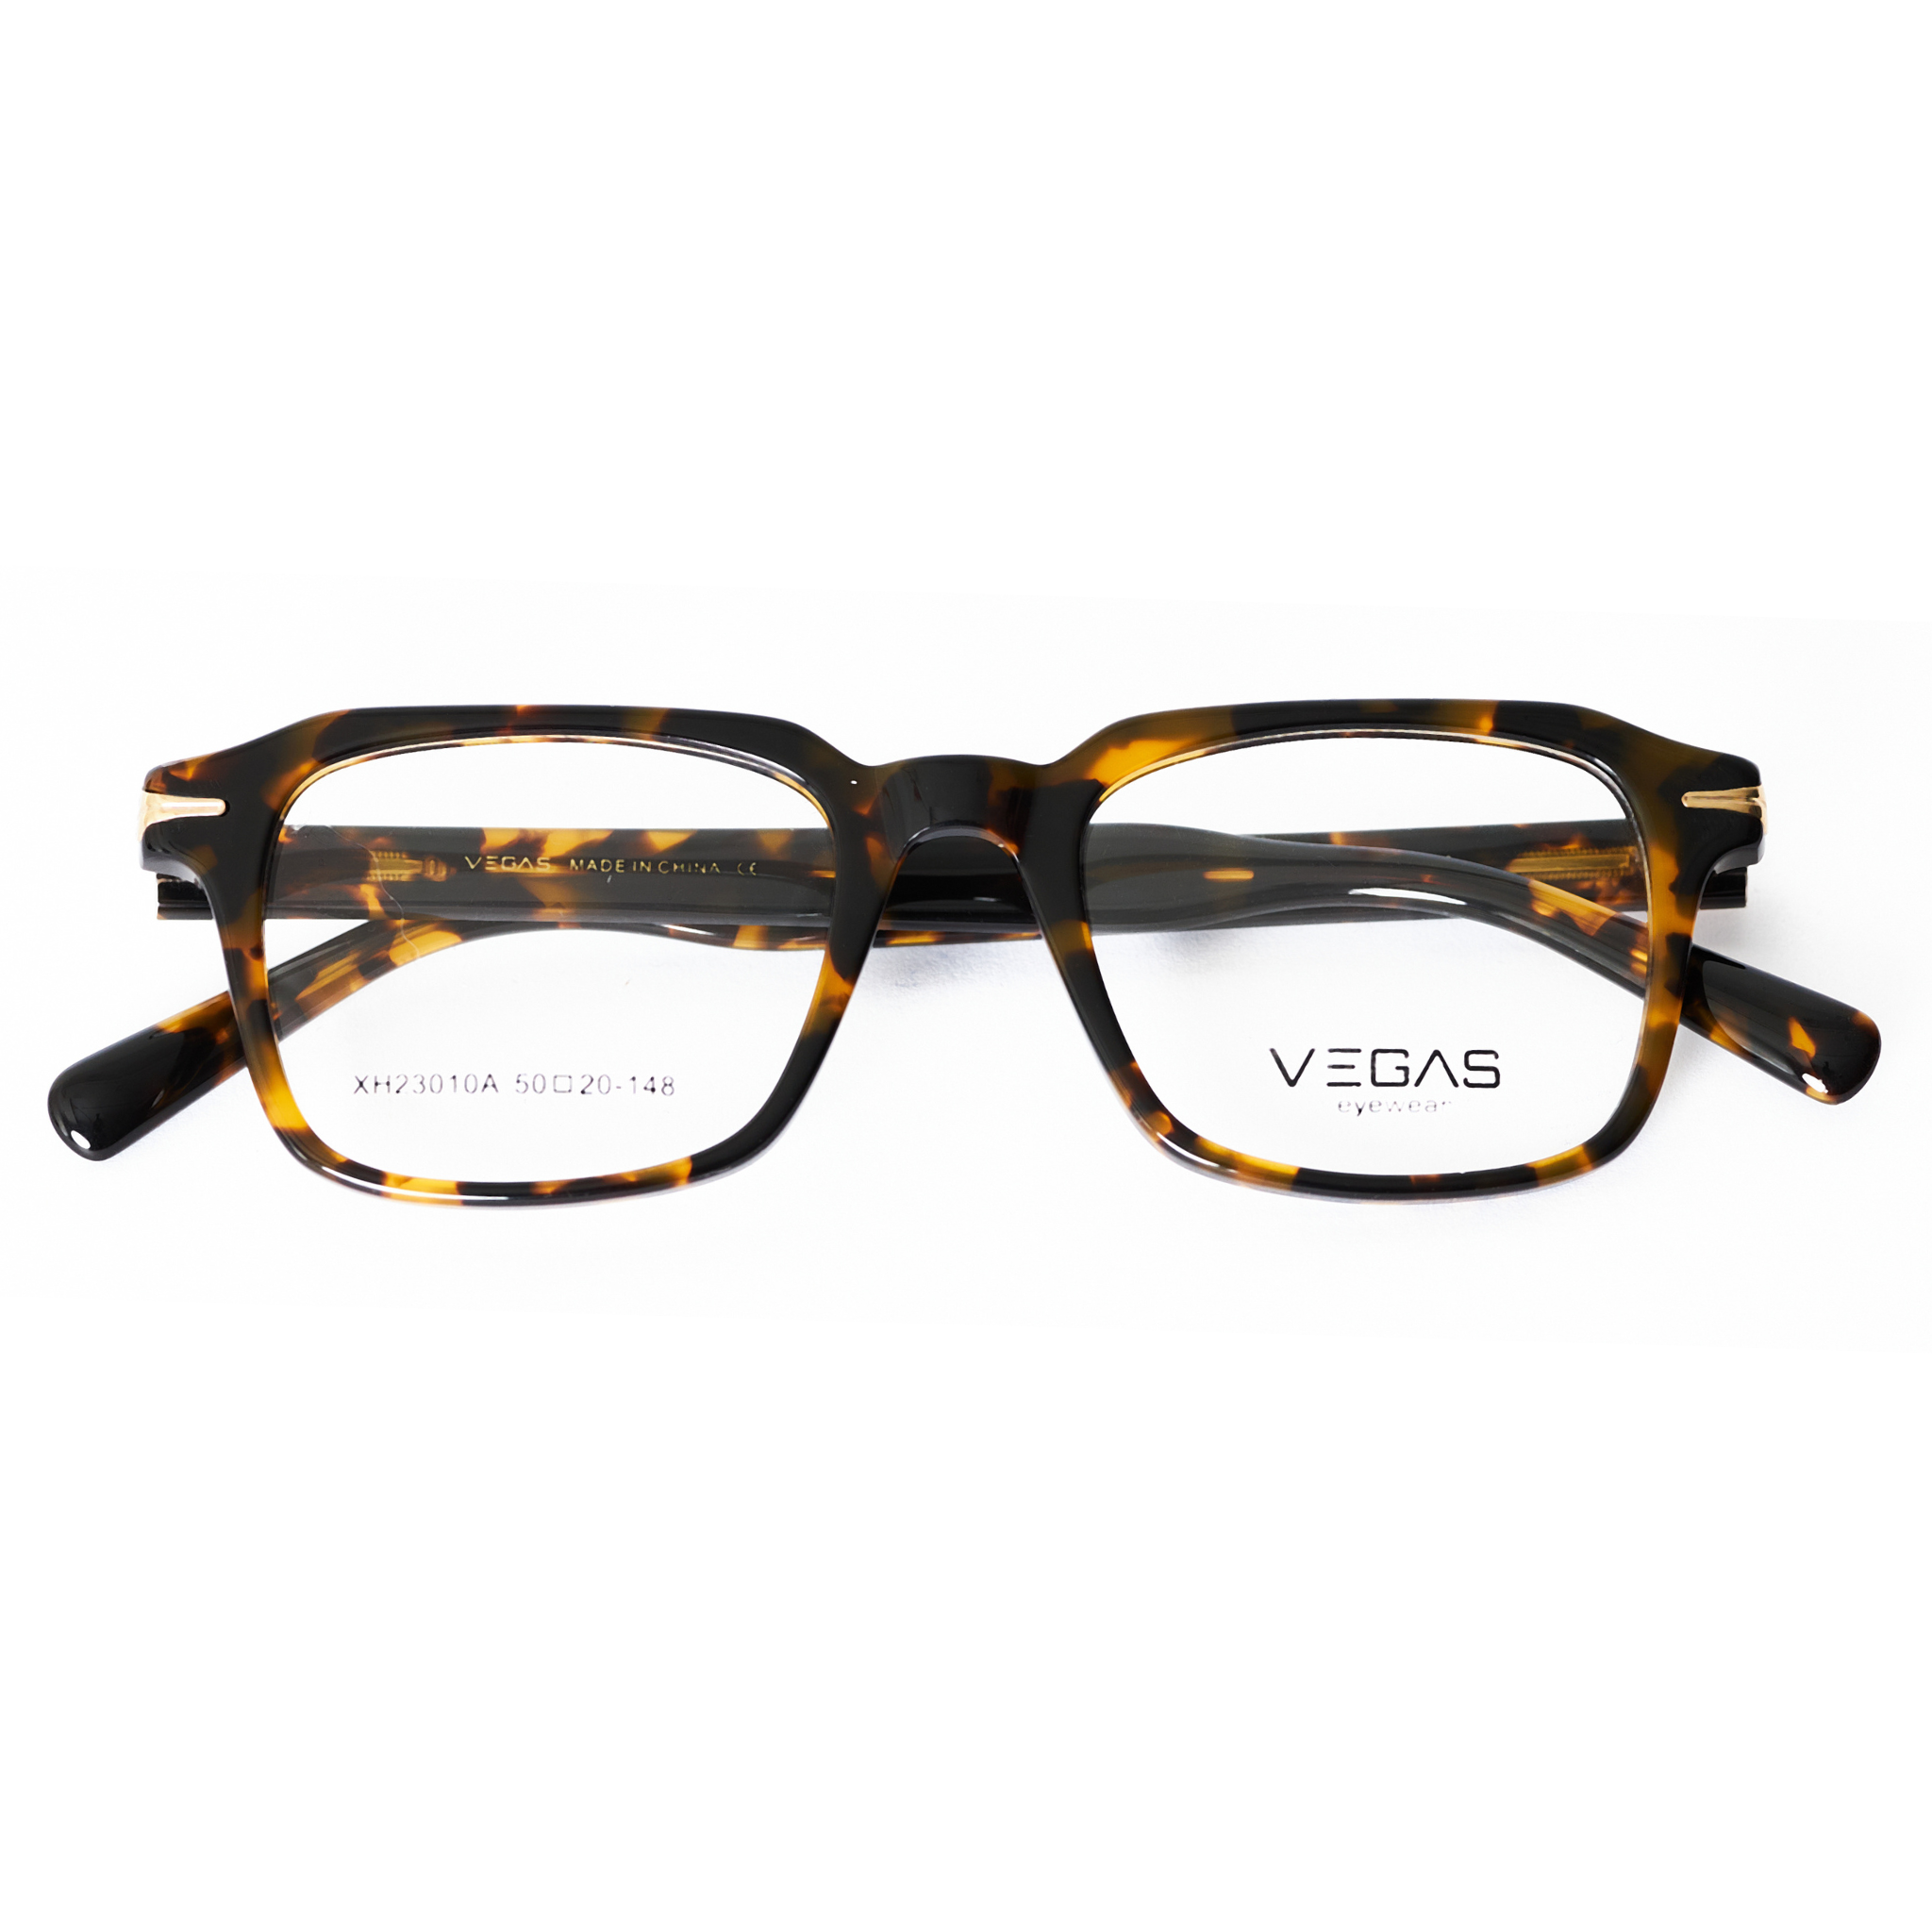 Eyeglasses| Vegas XH23010A